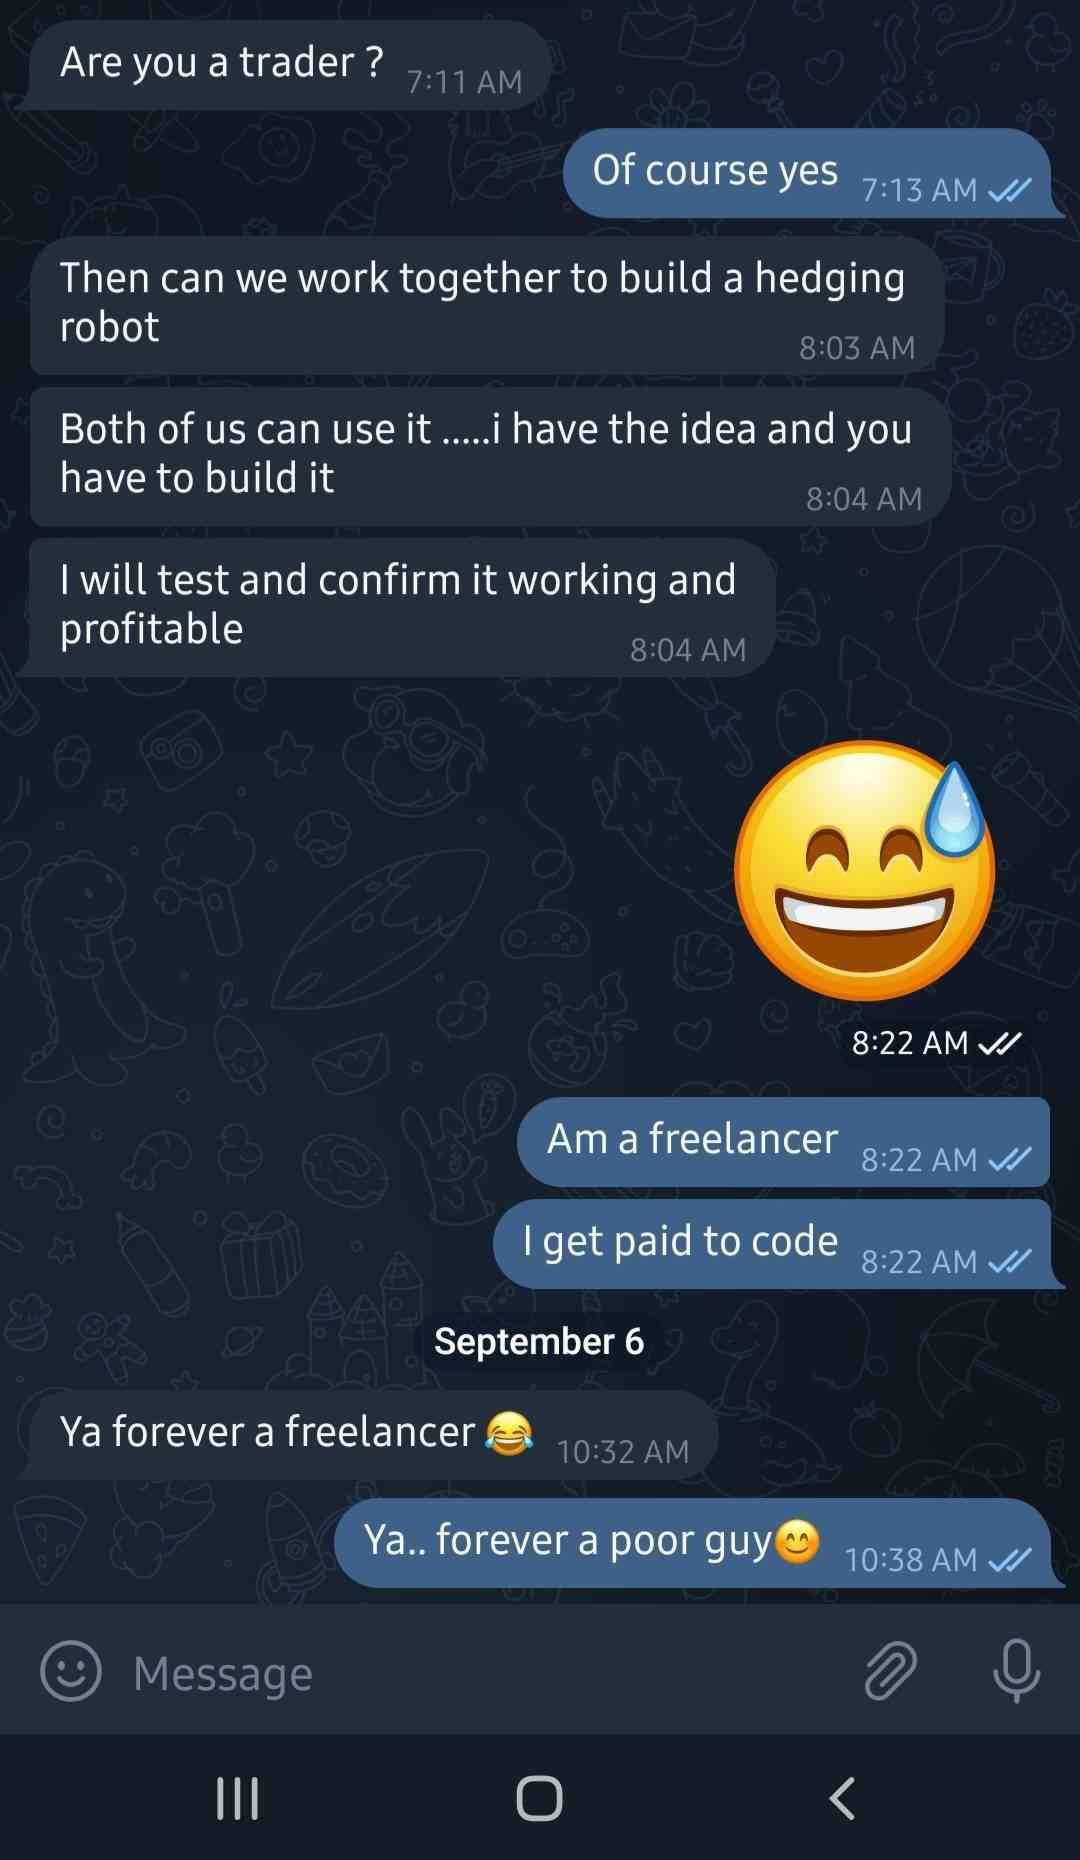 Ya forever a freelancer